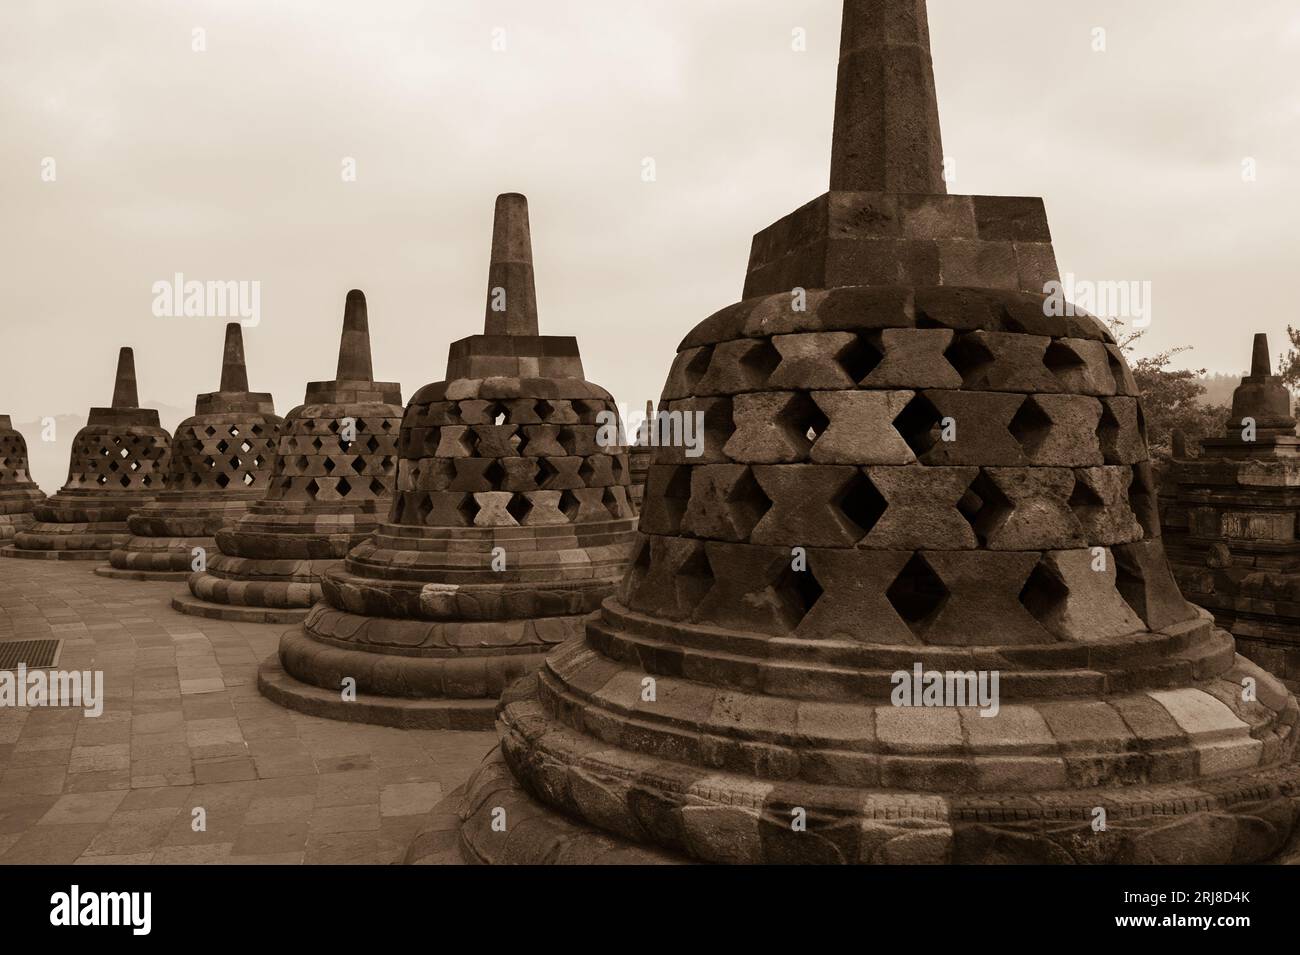 Borobudu al amanecer con estupa, estupas múltiples, en sepia con luz suave Foto de stock